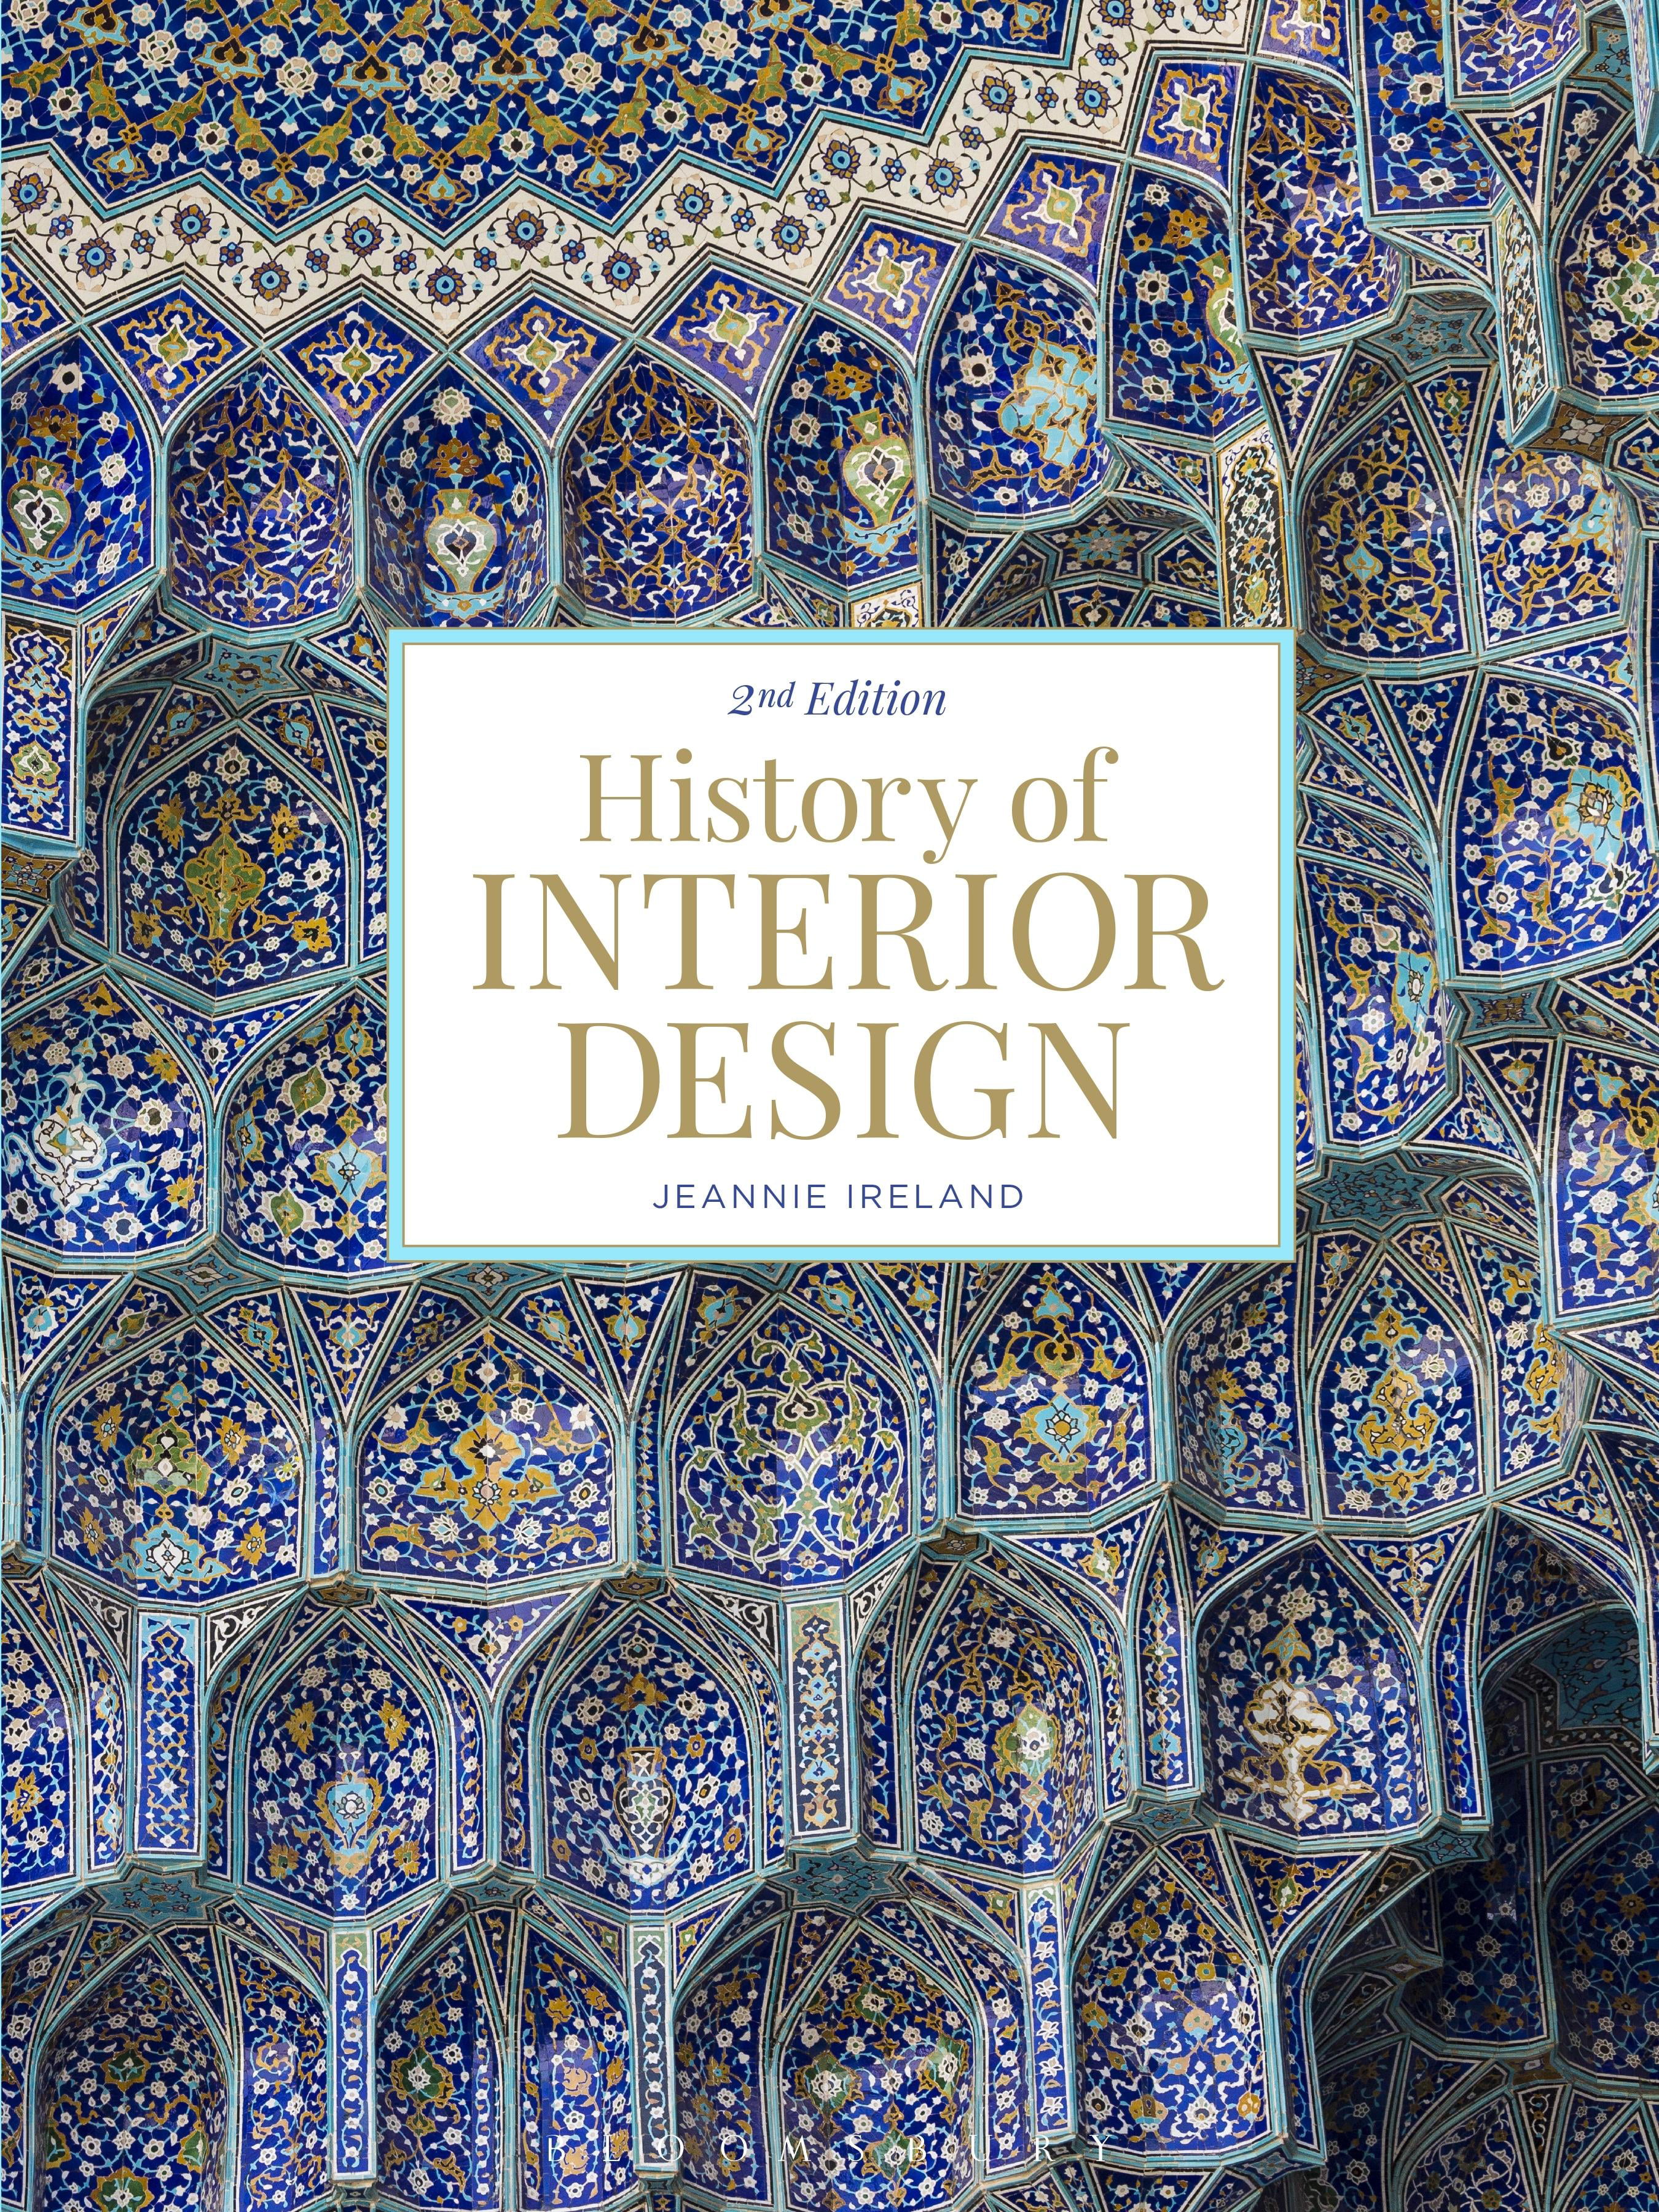 a history of interior design pdf free download